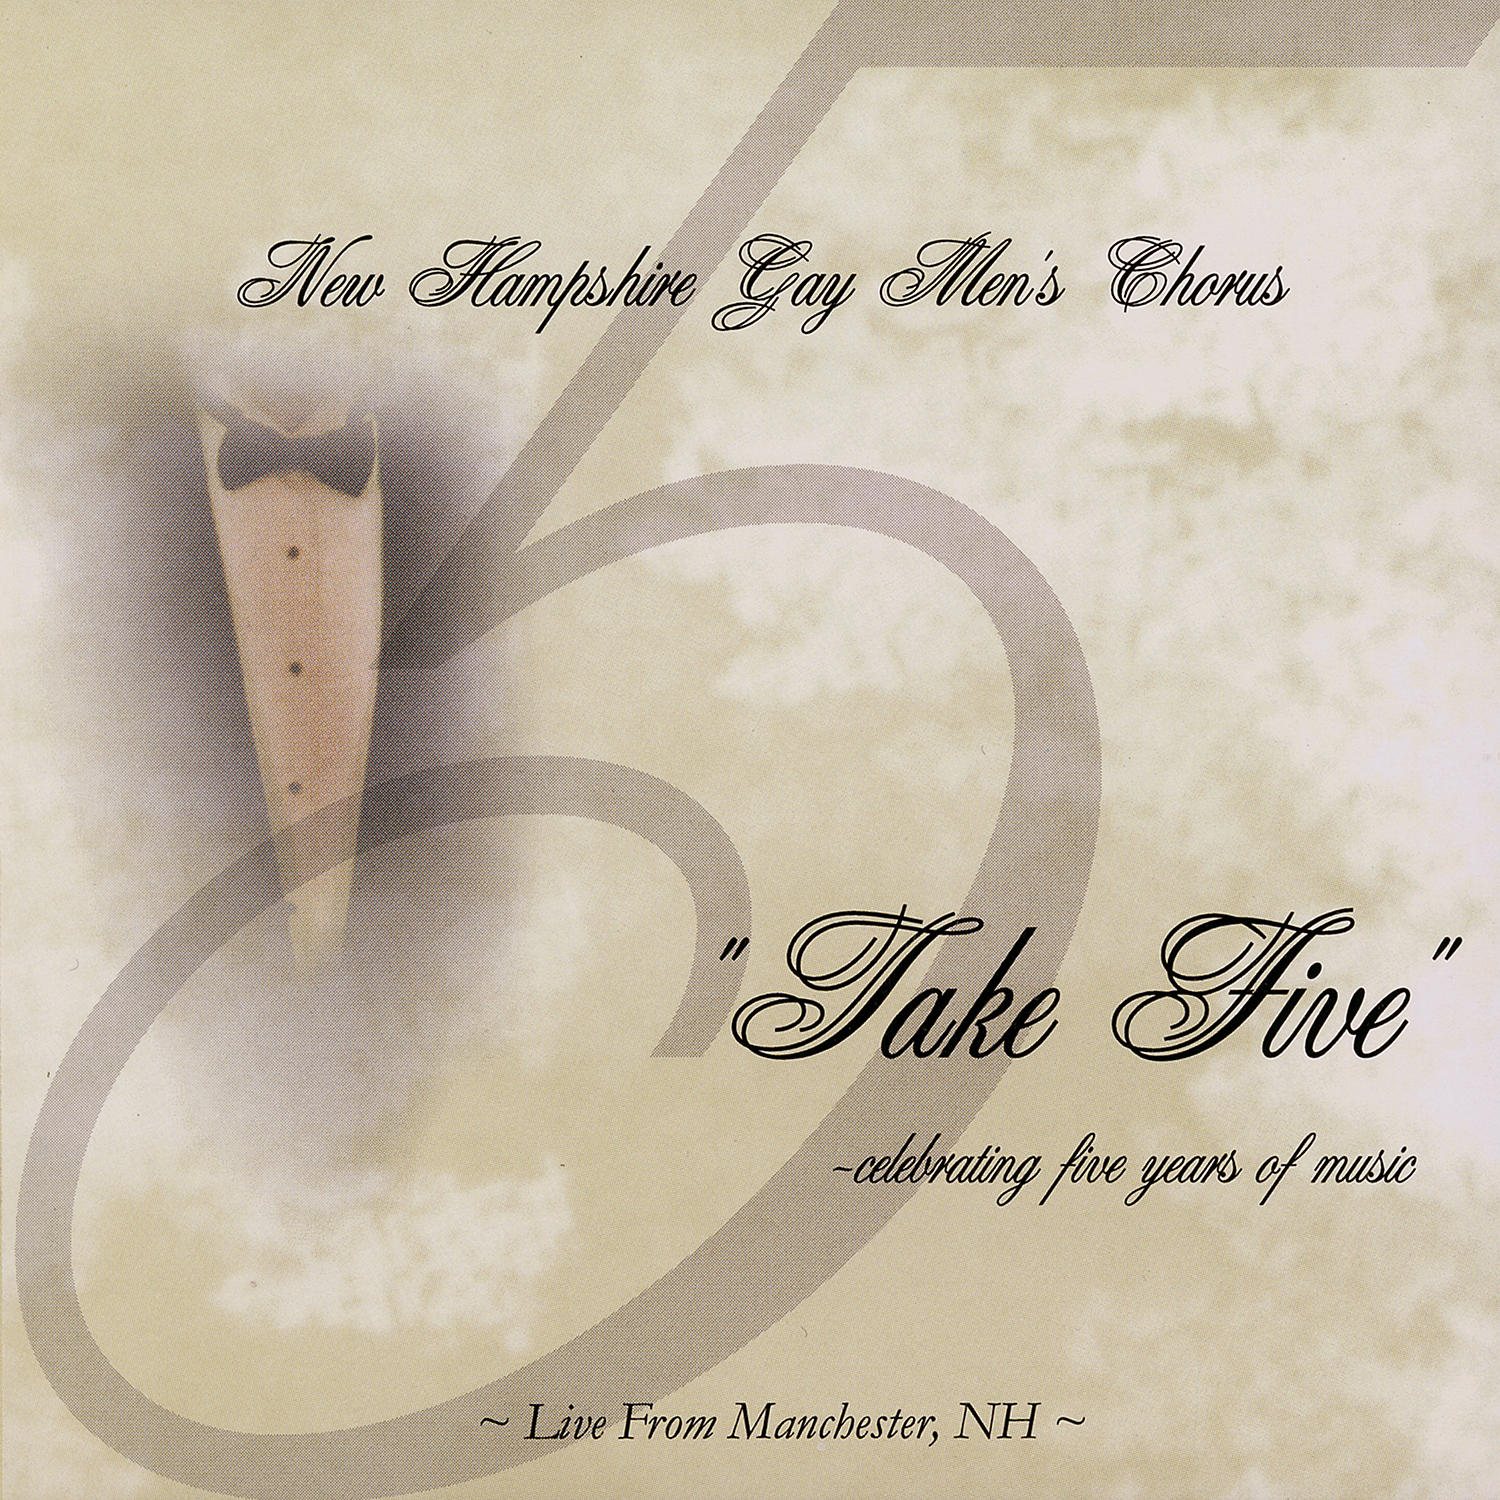 Take Five: Celebrating Five Years of Music